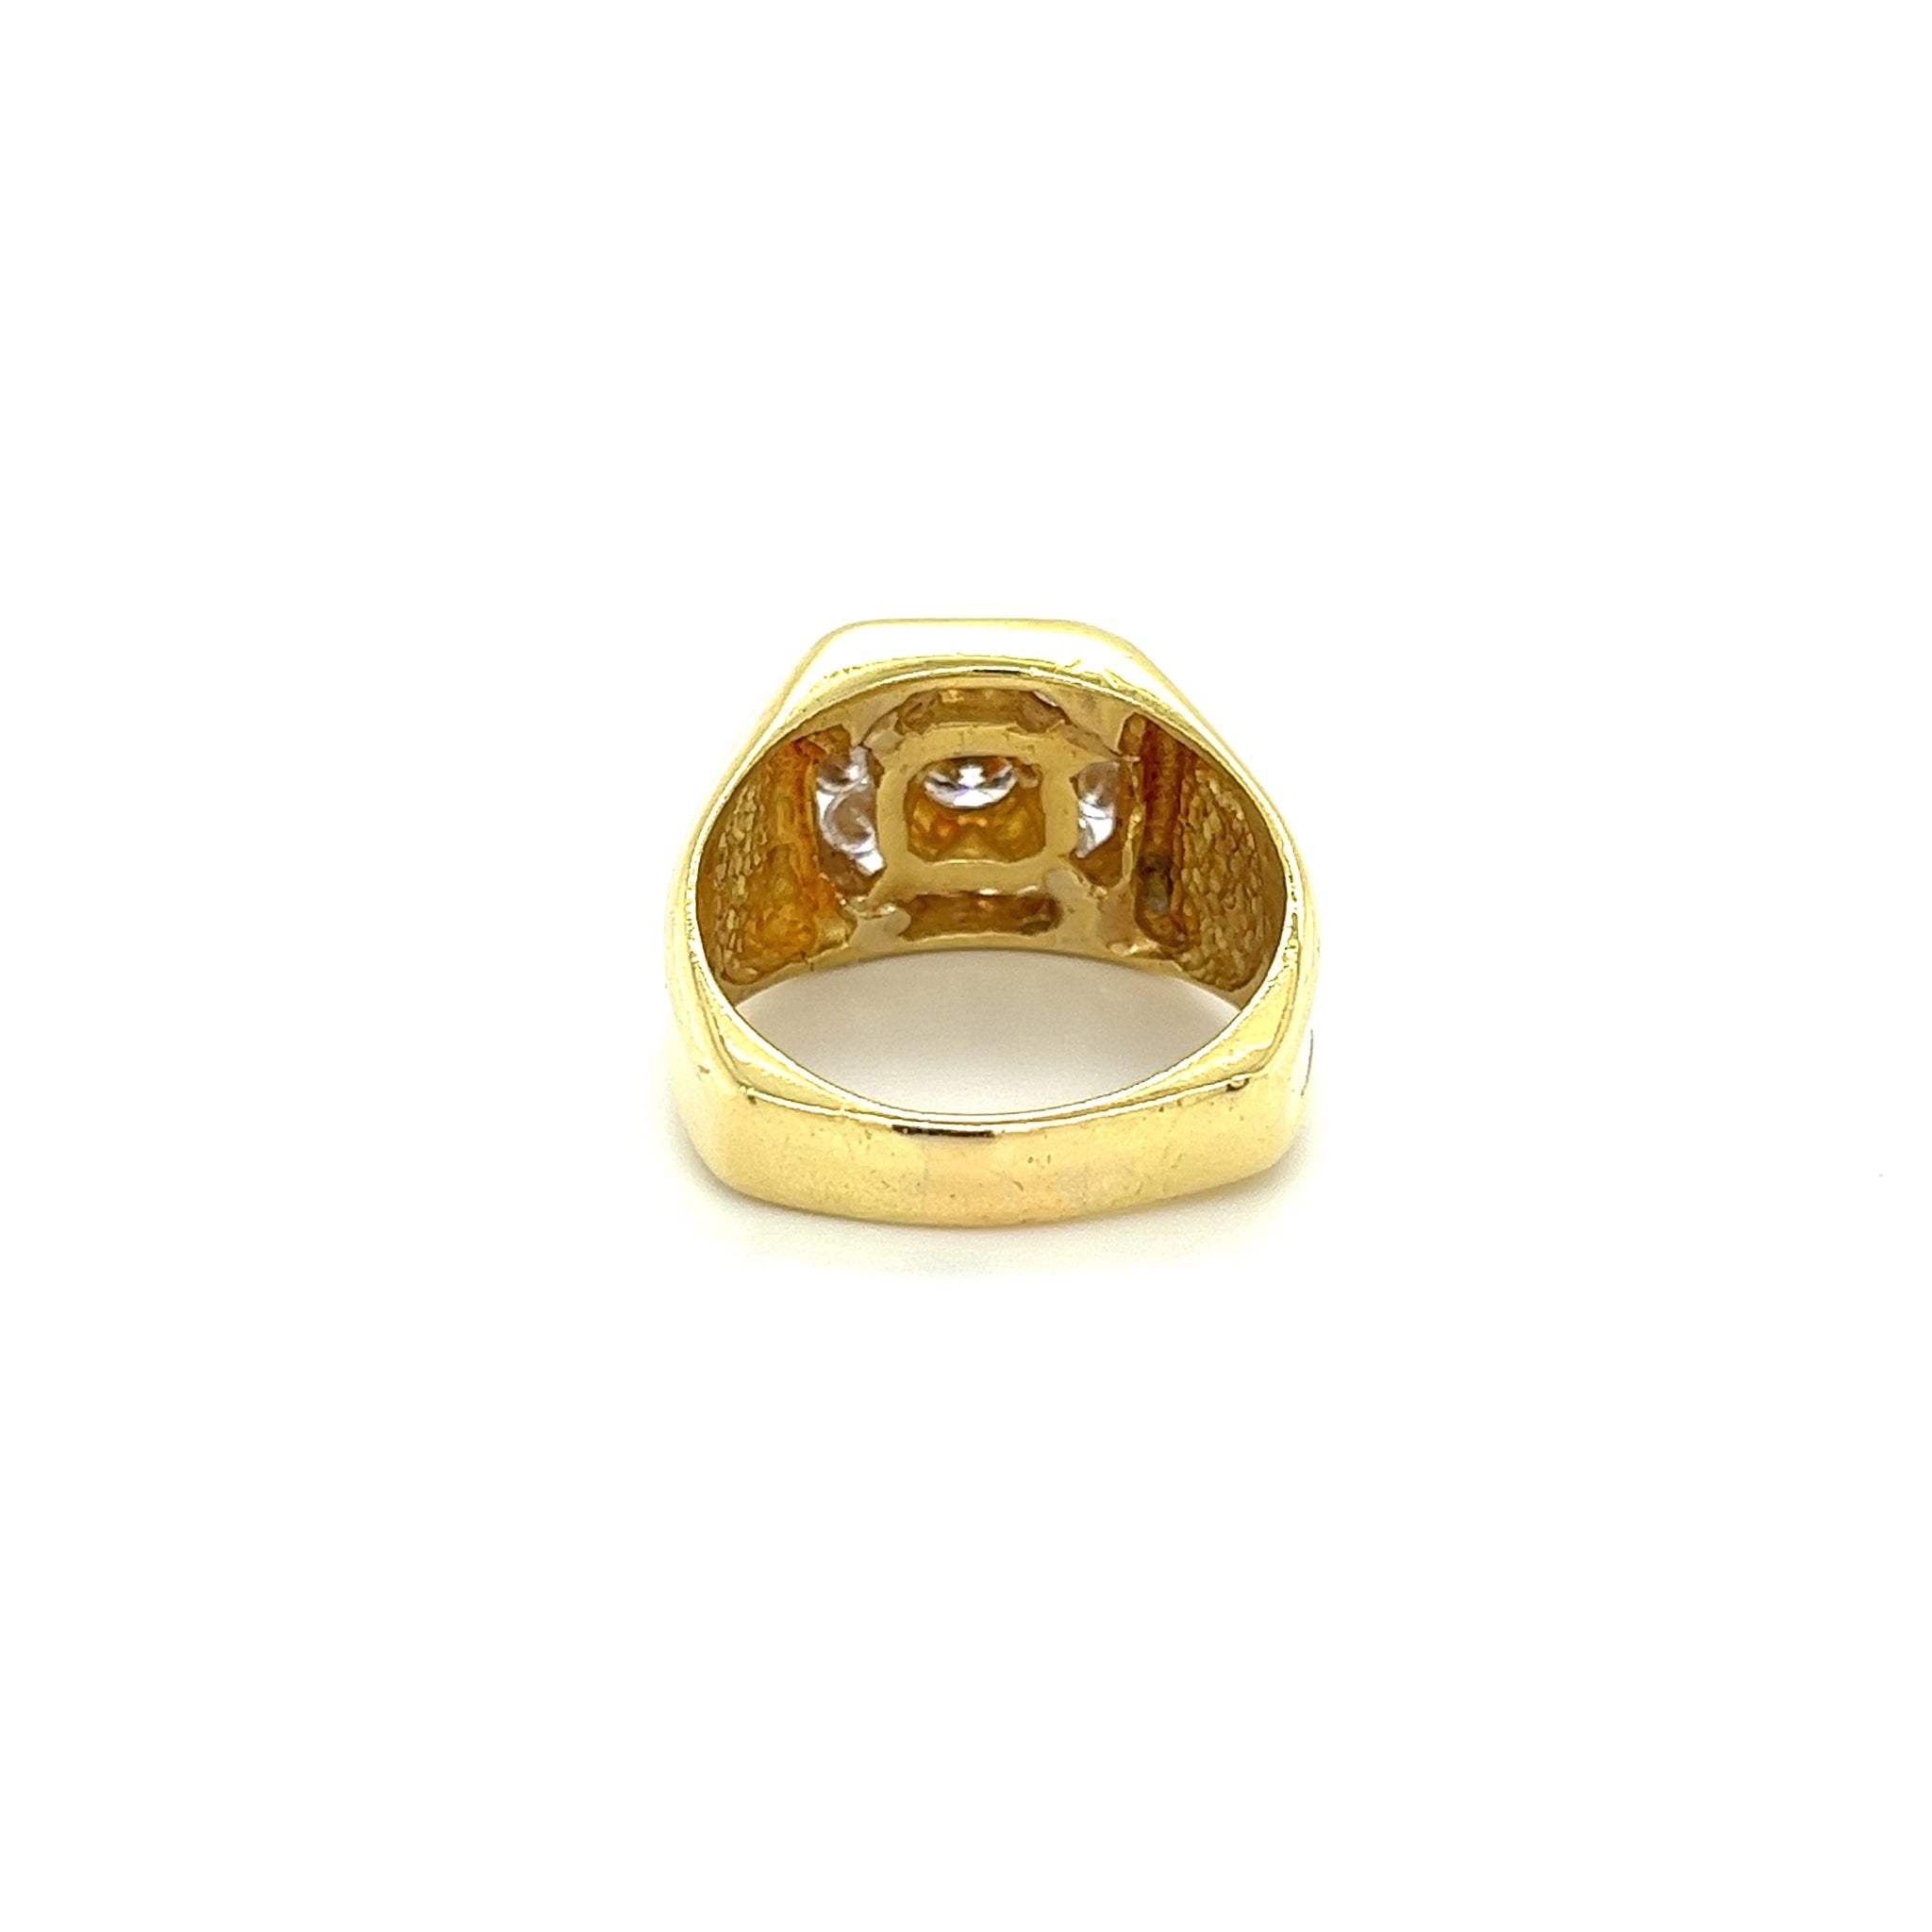 Vintage 1.5 Carat TW Bezel and Channel Set Natural Diamond Mens Ring in 18K Gold